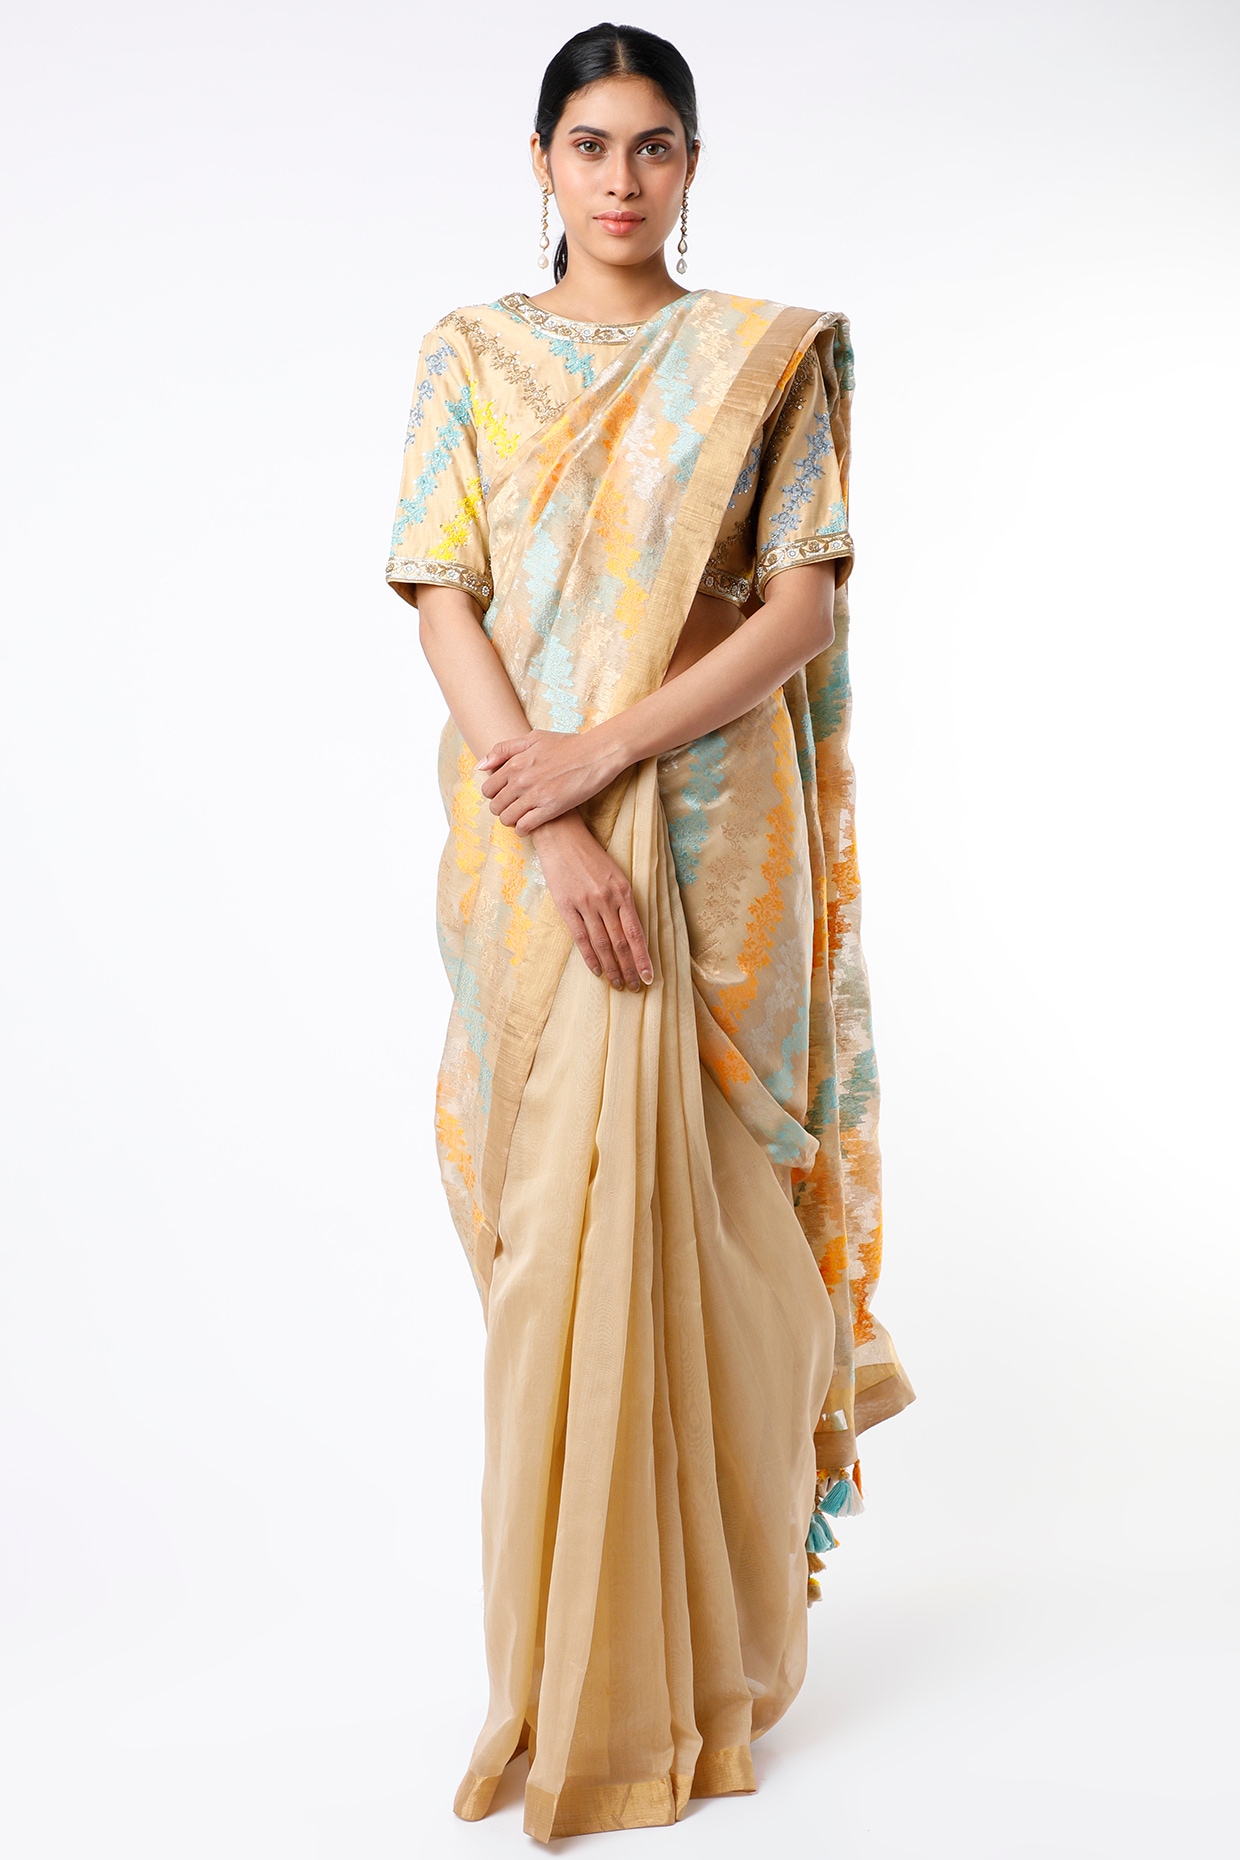 Karwachauth Special Leheriya Saree with Beautiful Embroidered Gotapatt –  Priyaz Gallery